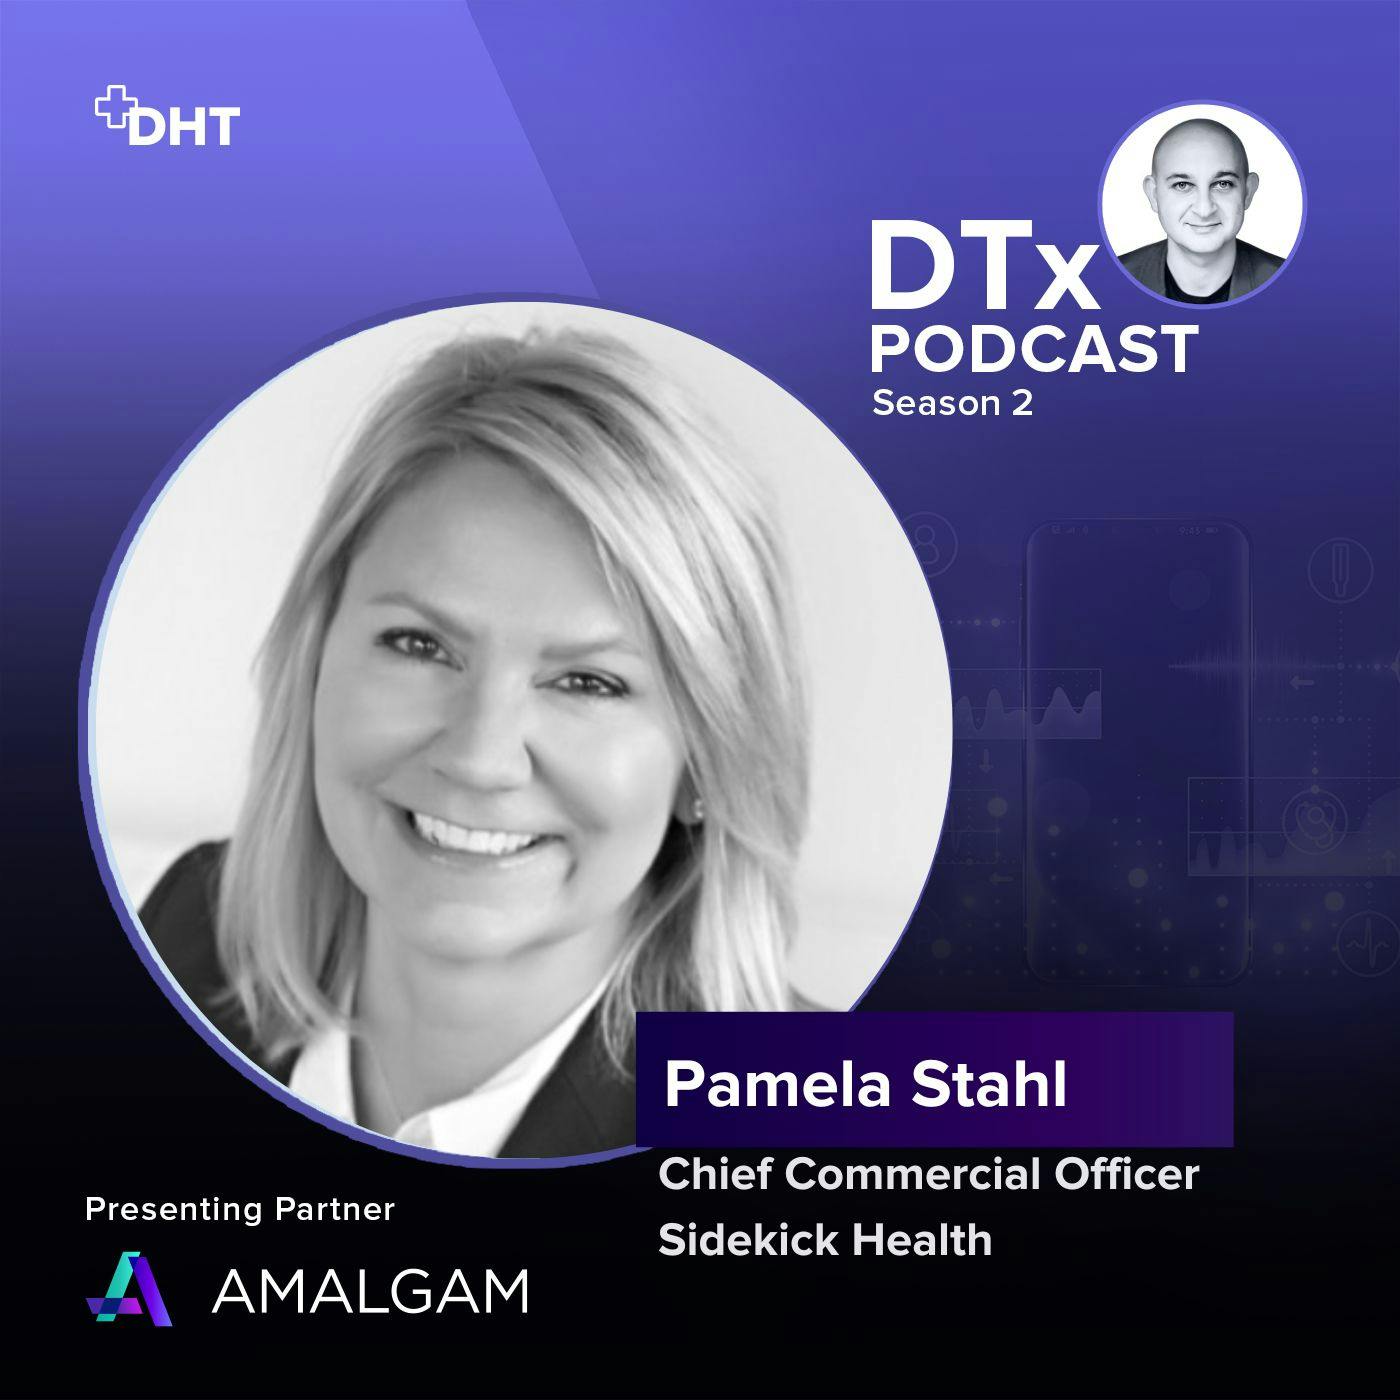 Gamifying Healthcare to Enable Behavior Change: Pamela Stahl Shares Insights into Sidekick Heath's Digital Therapeutics